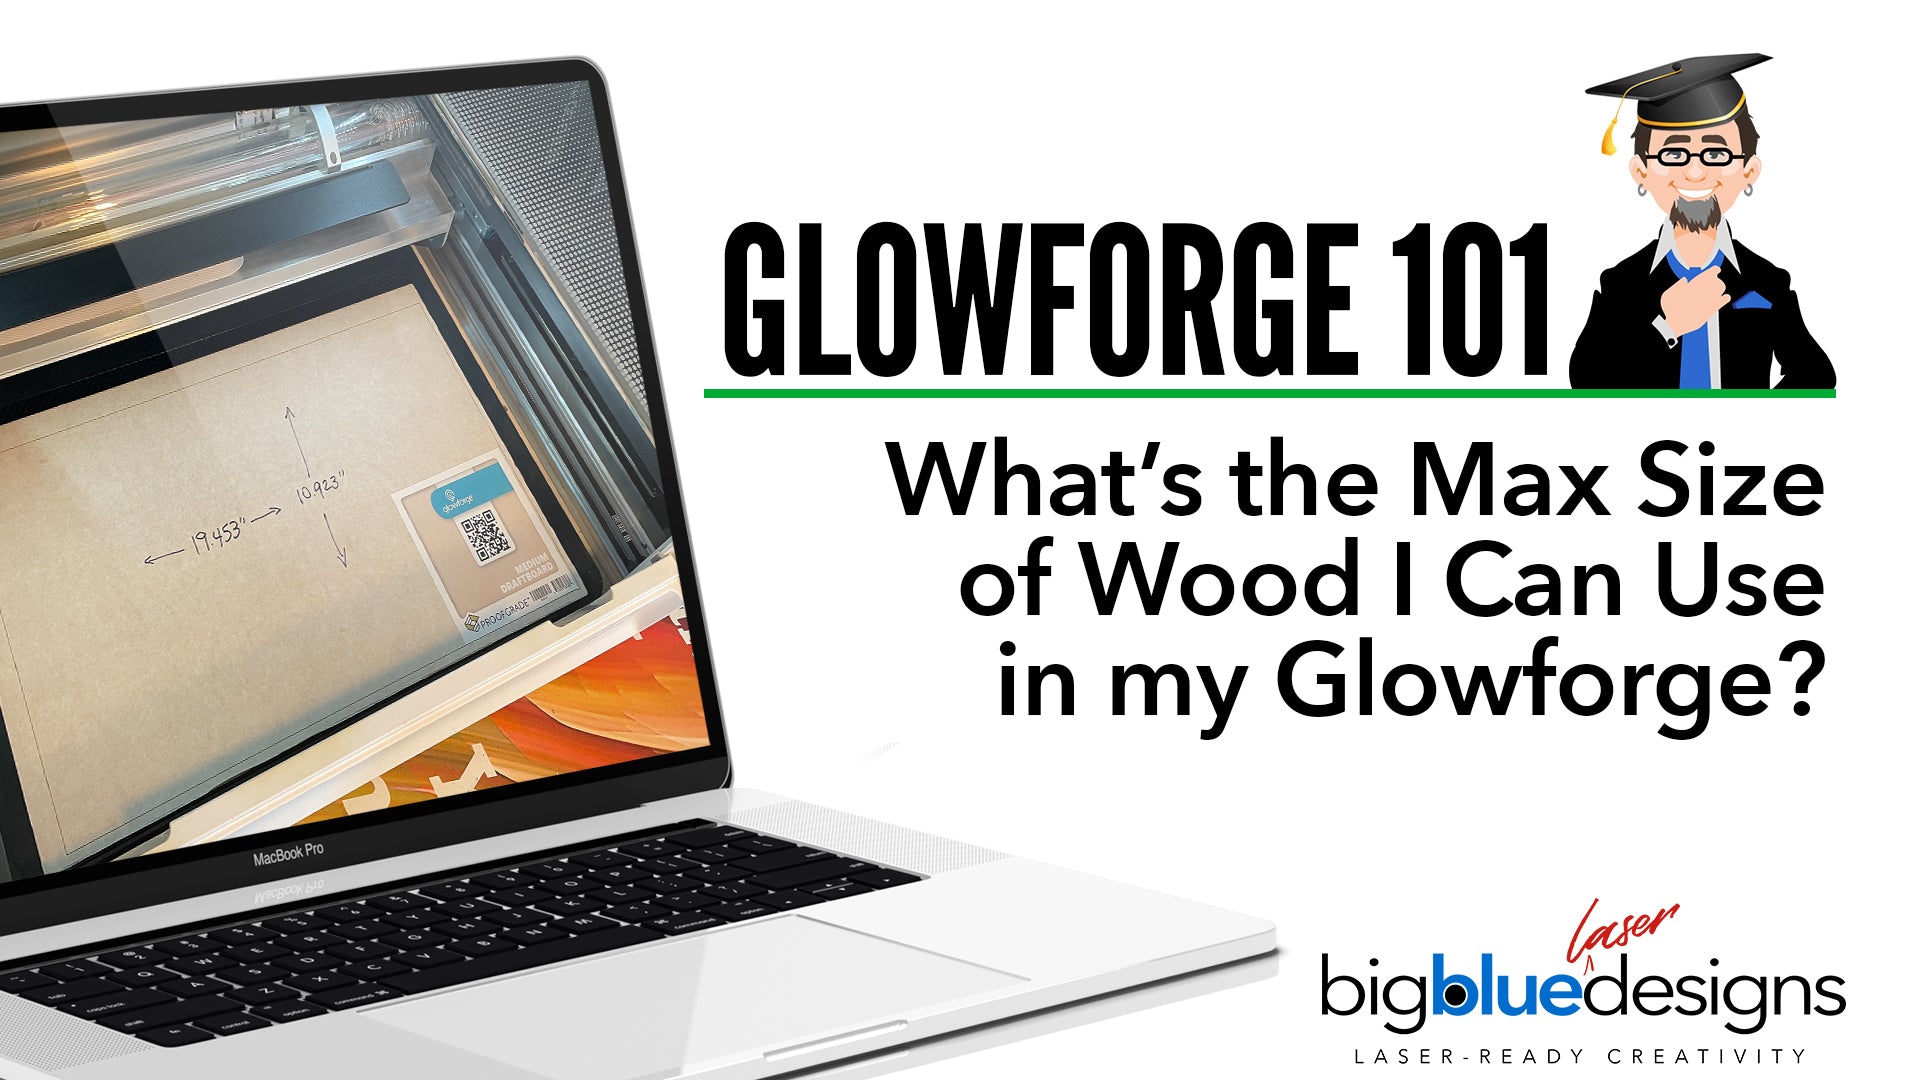 Glowforge 101: What’s the Max Size of Wood I Can Use in My Glowforge?